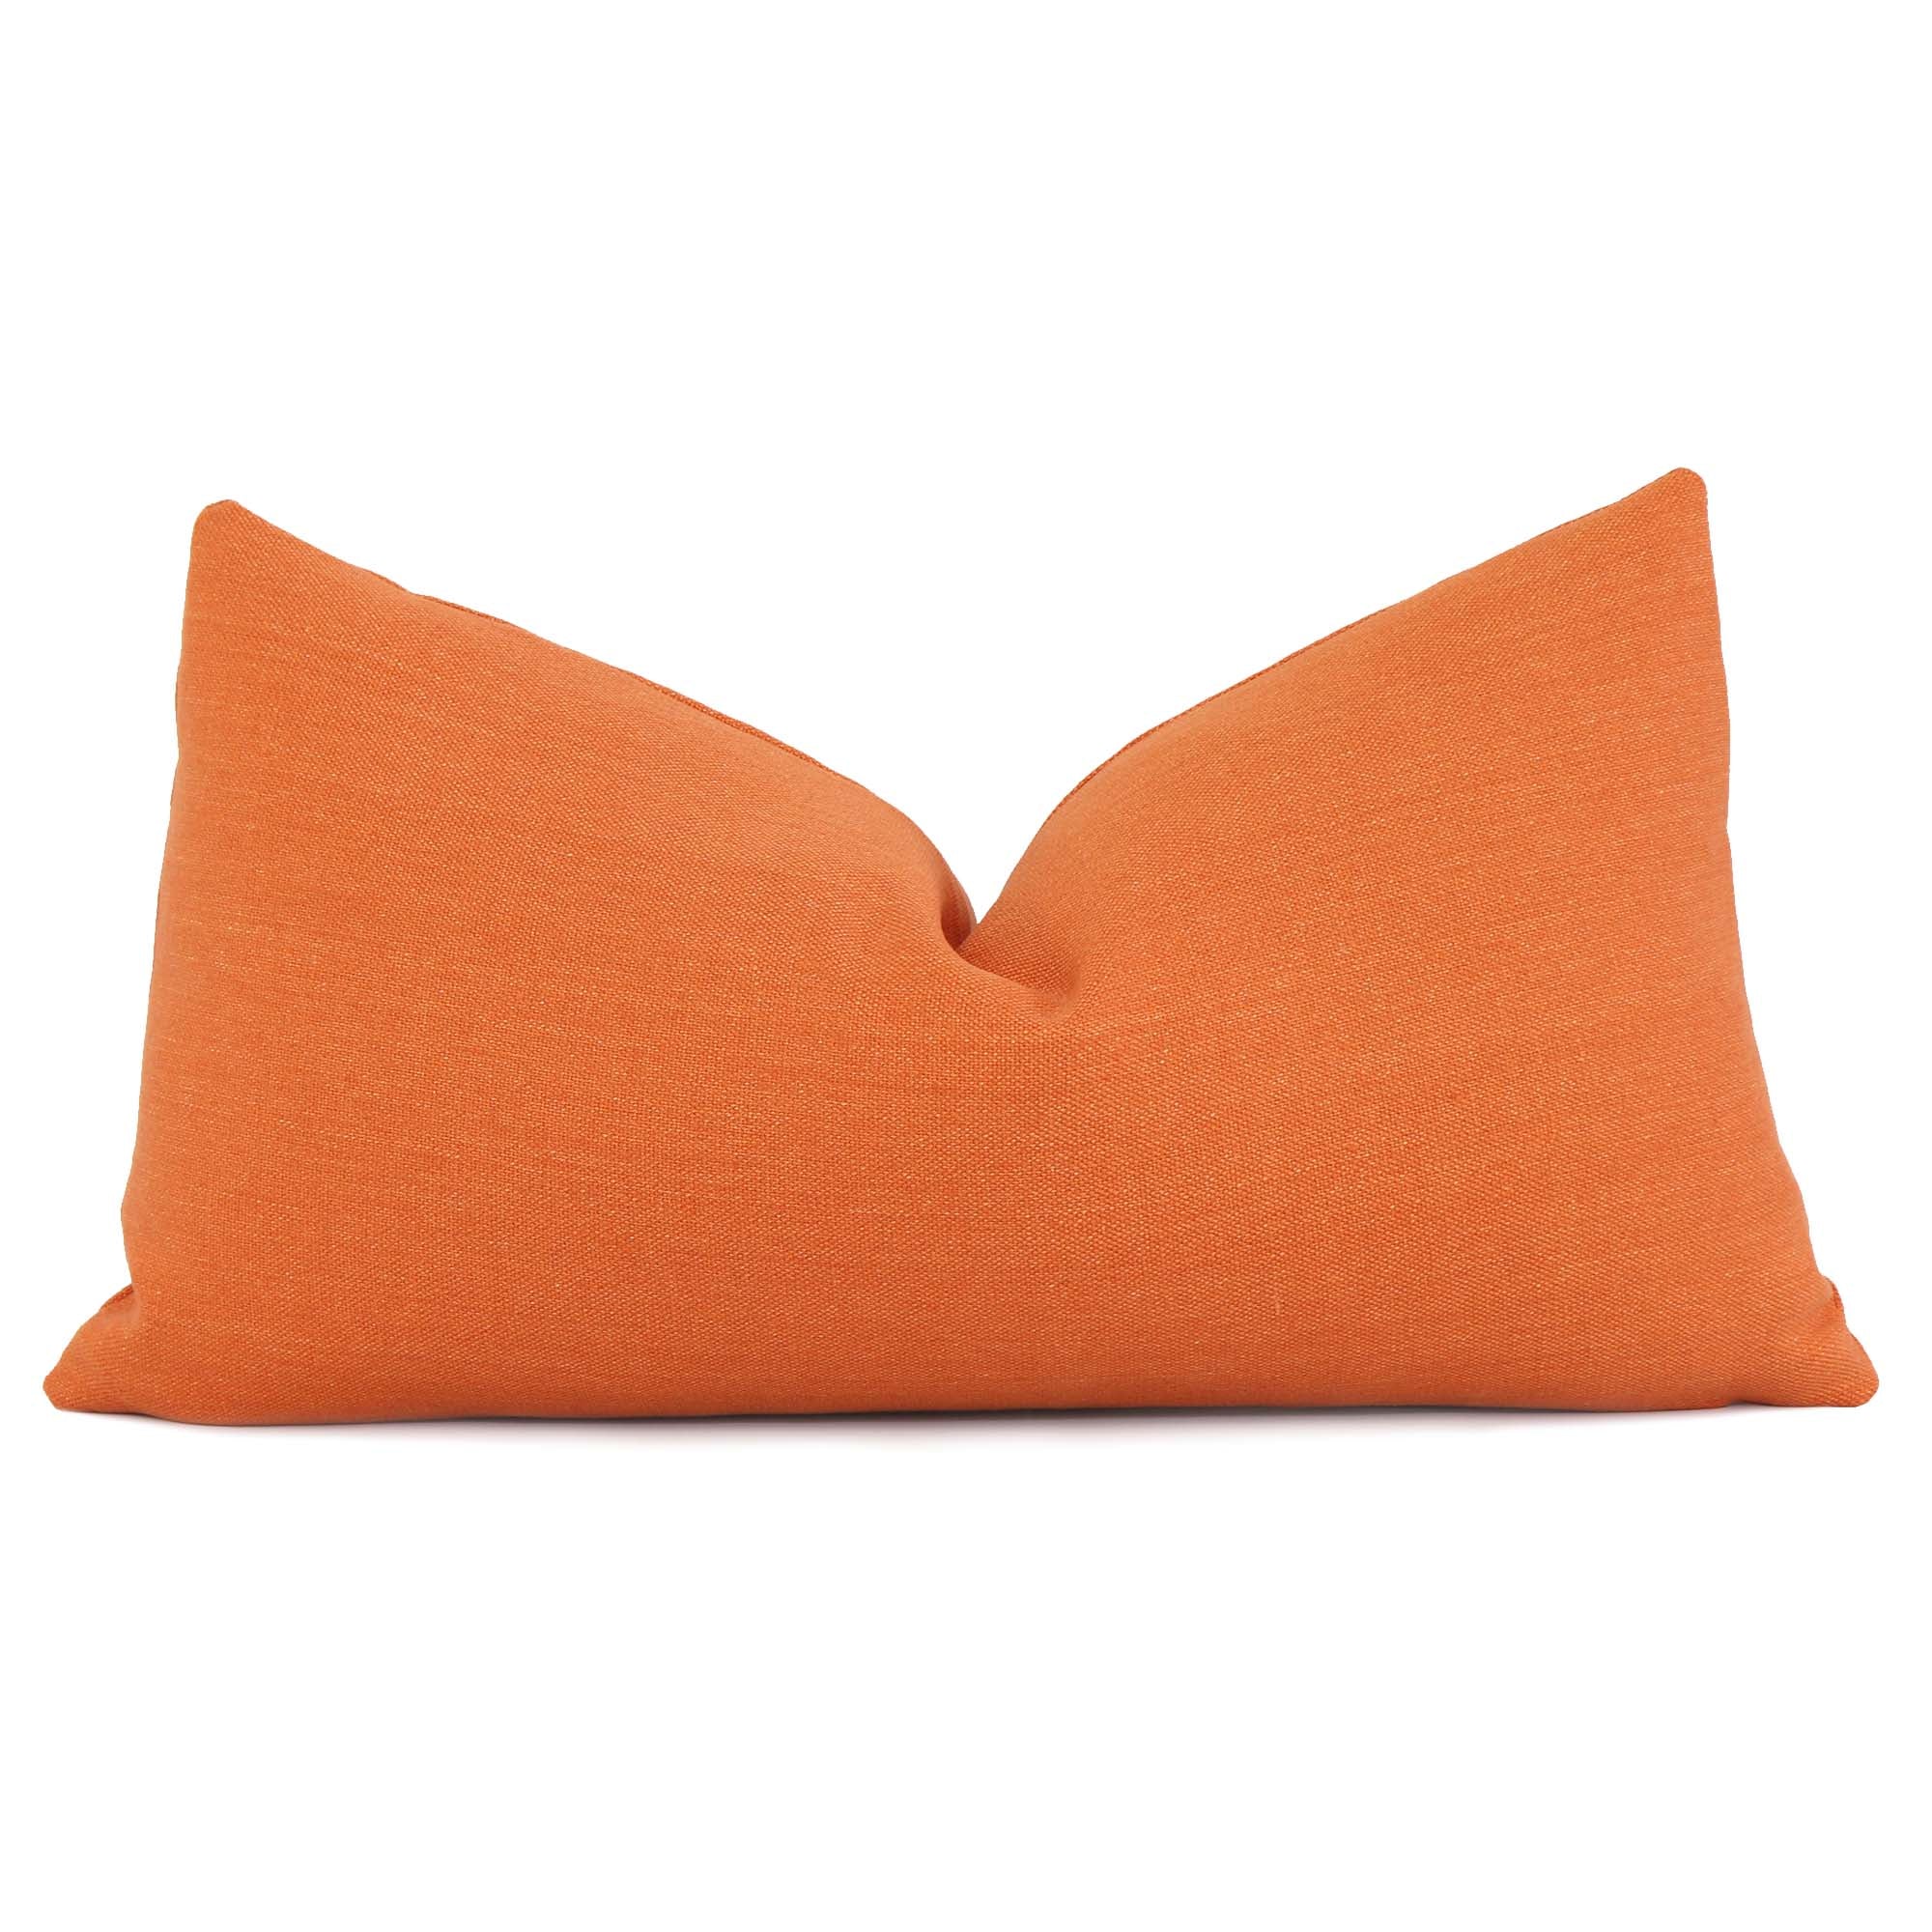 Tay Pumpkin Orange Solid Linen Decorative Lumbar Throw Pillow Cover